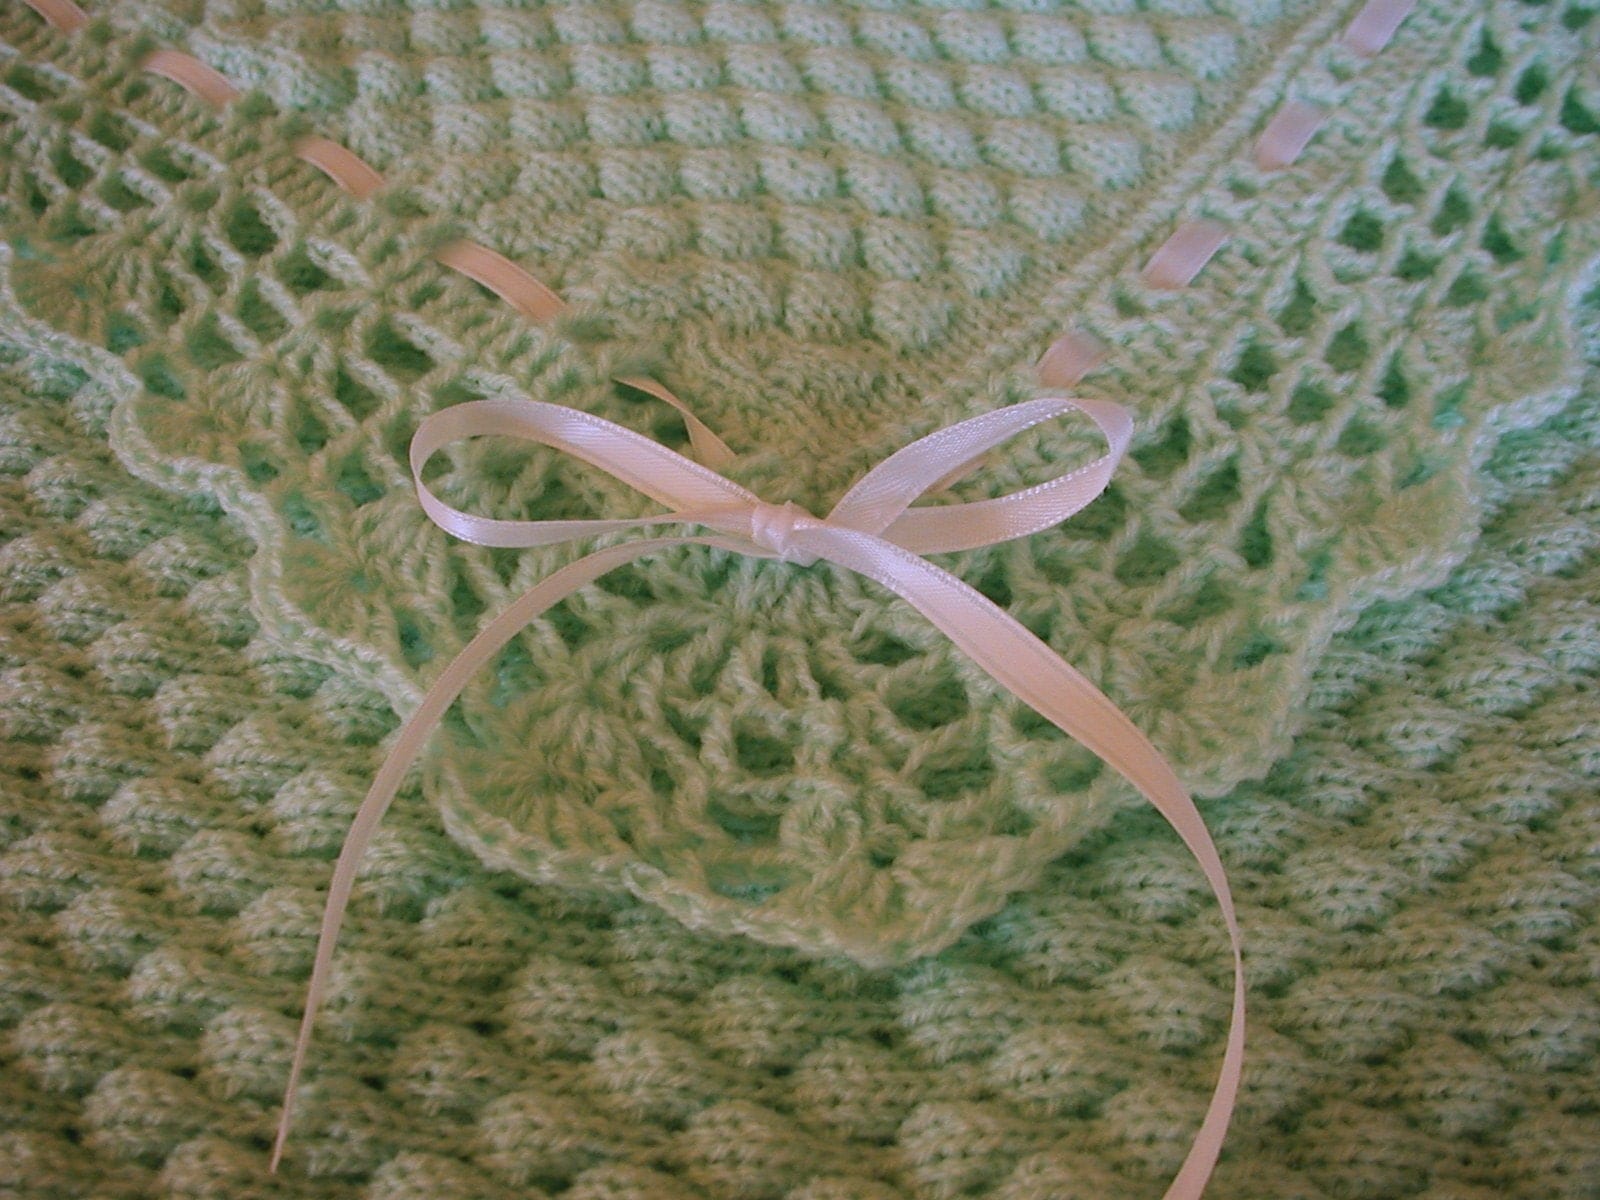 Free Crochet Baby Blanket Patterns - Simple Baby Blankets